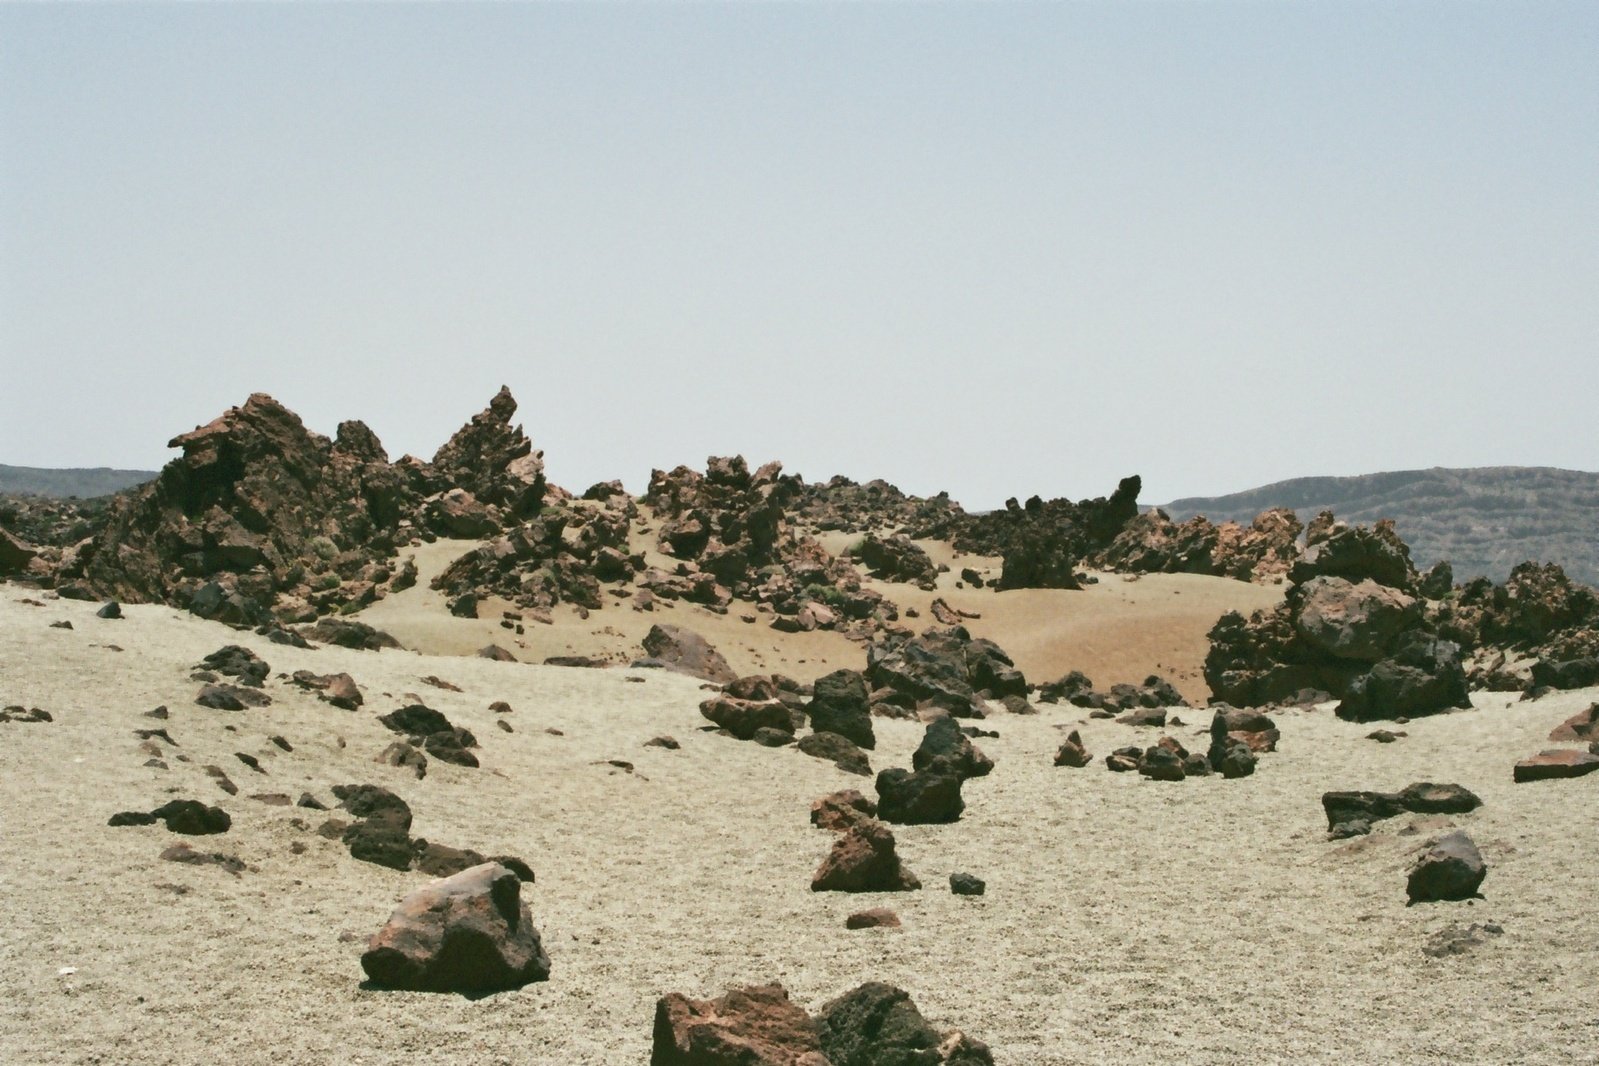 a dirt and rock filled plain under a blue sky